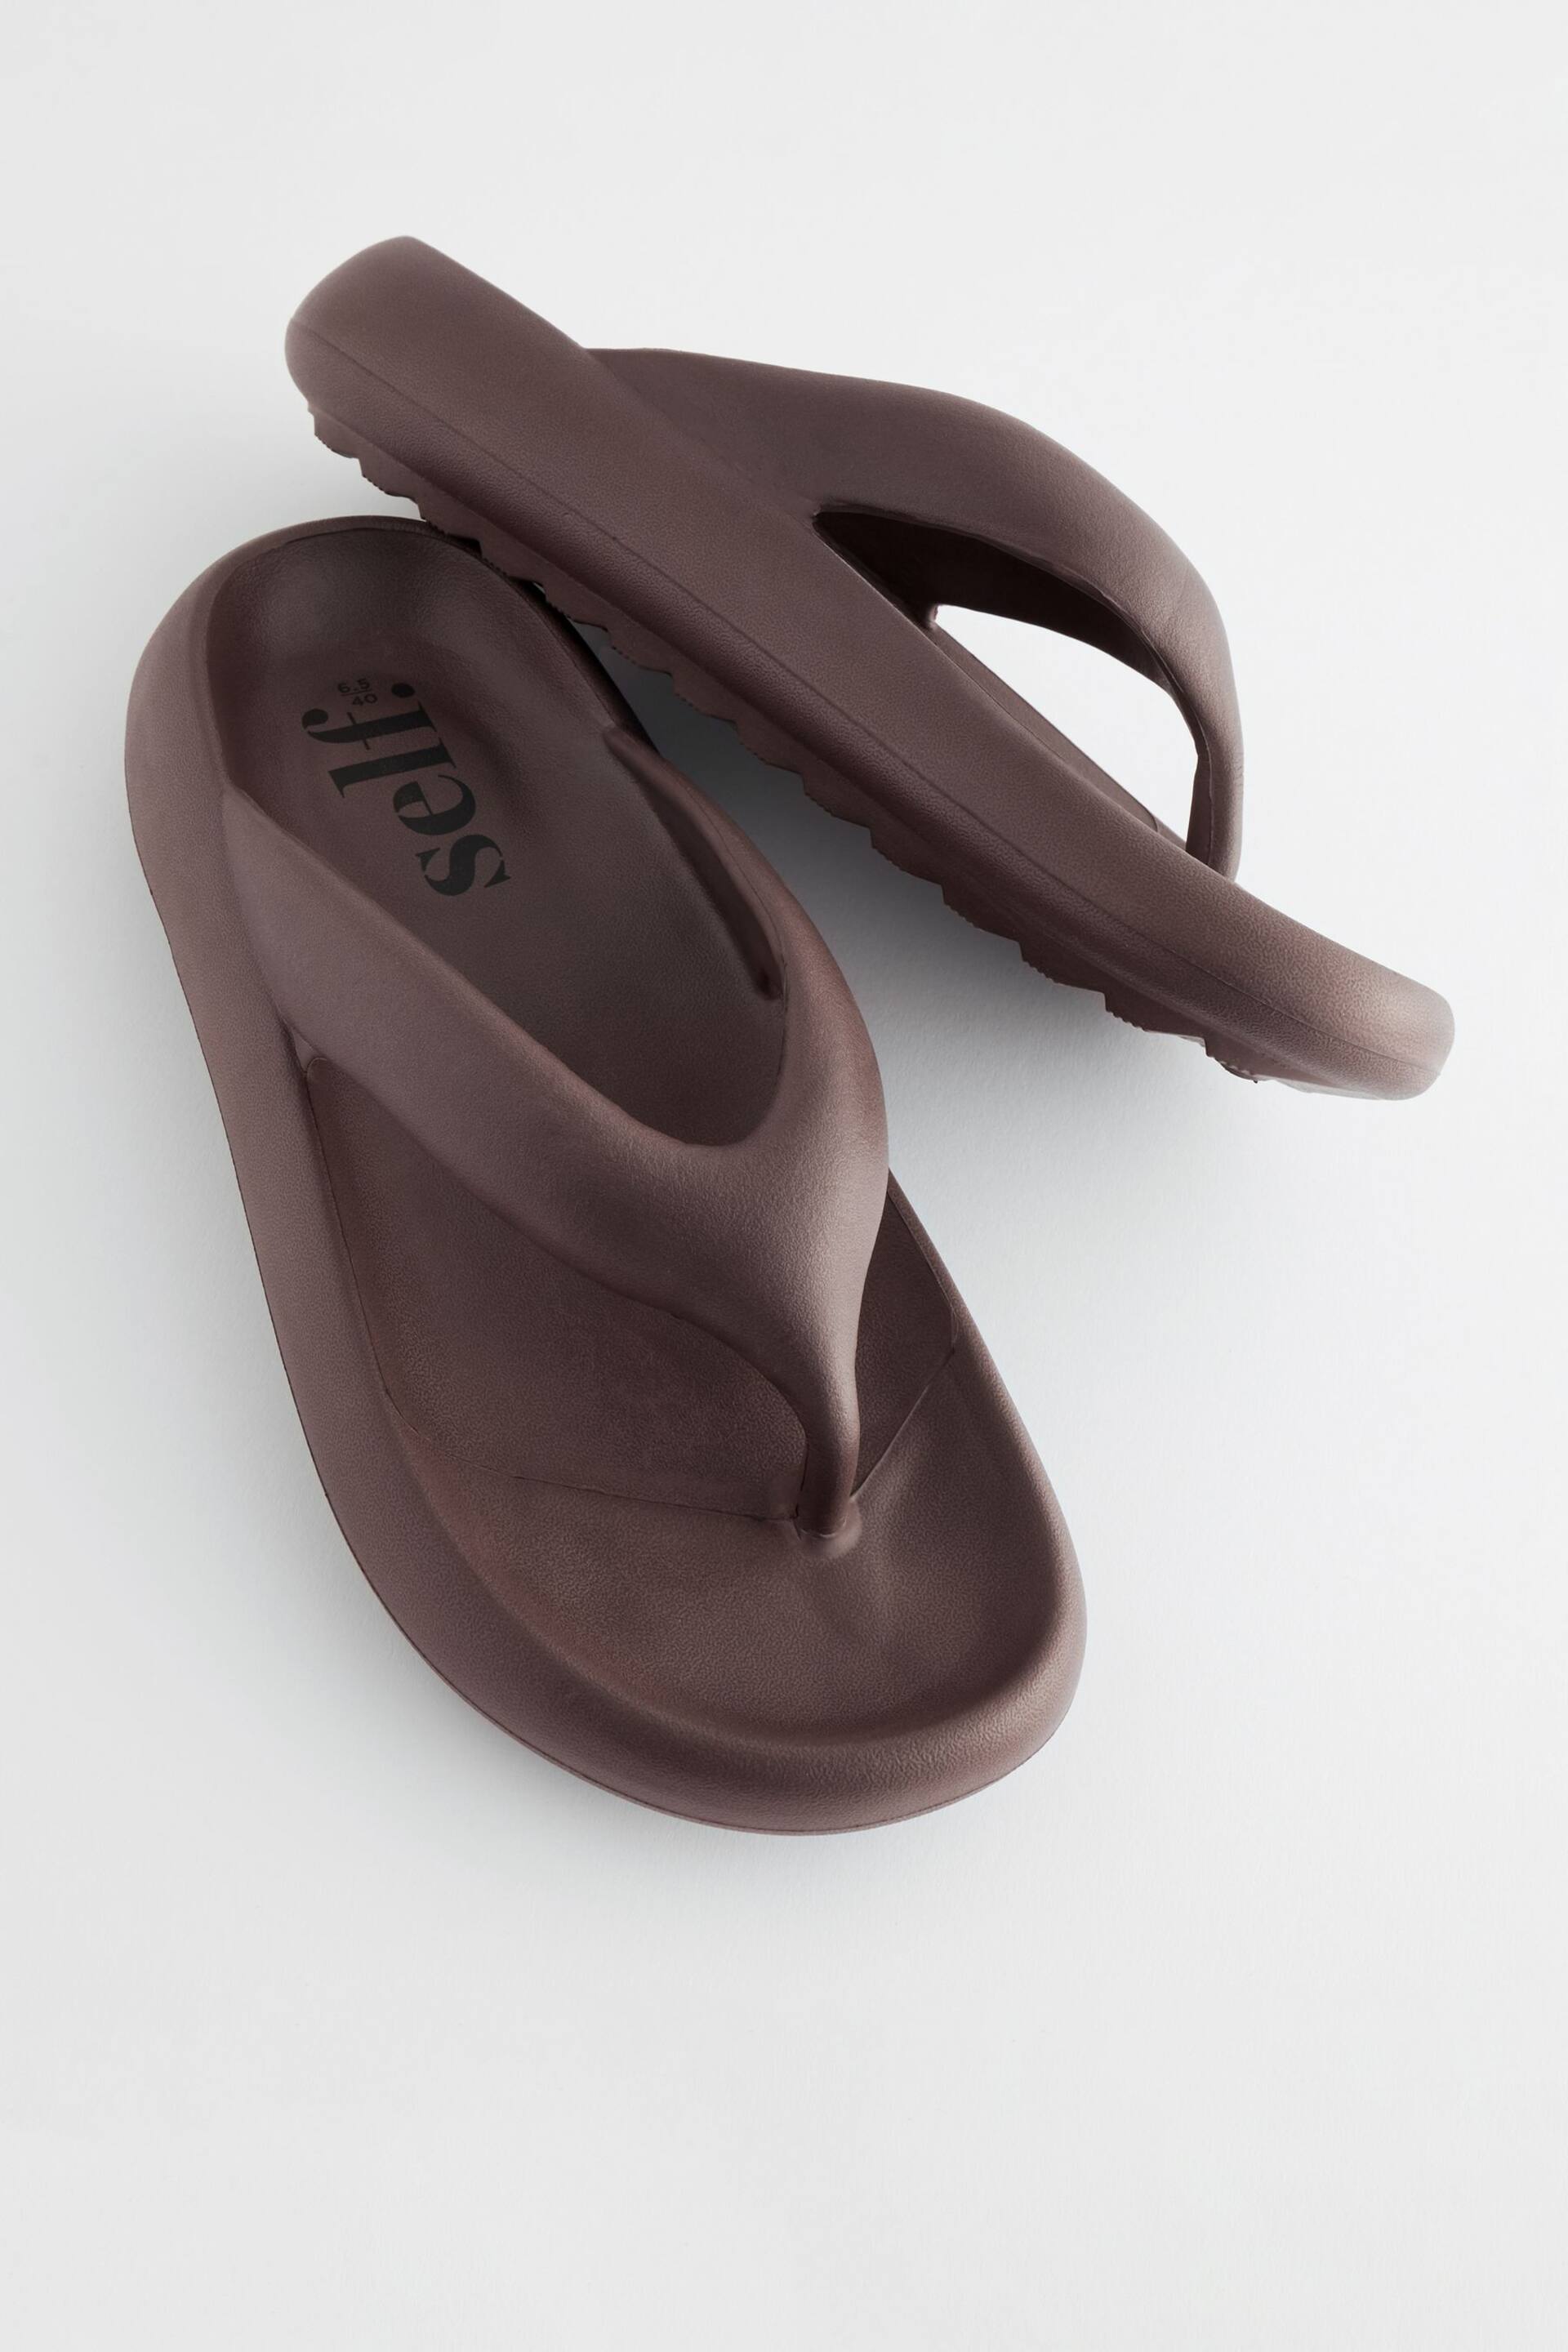 Chocolate Brown self. Chunky Flip Flops - Image 6 of 6